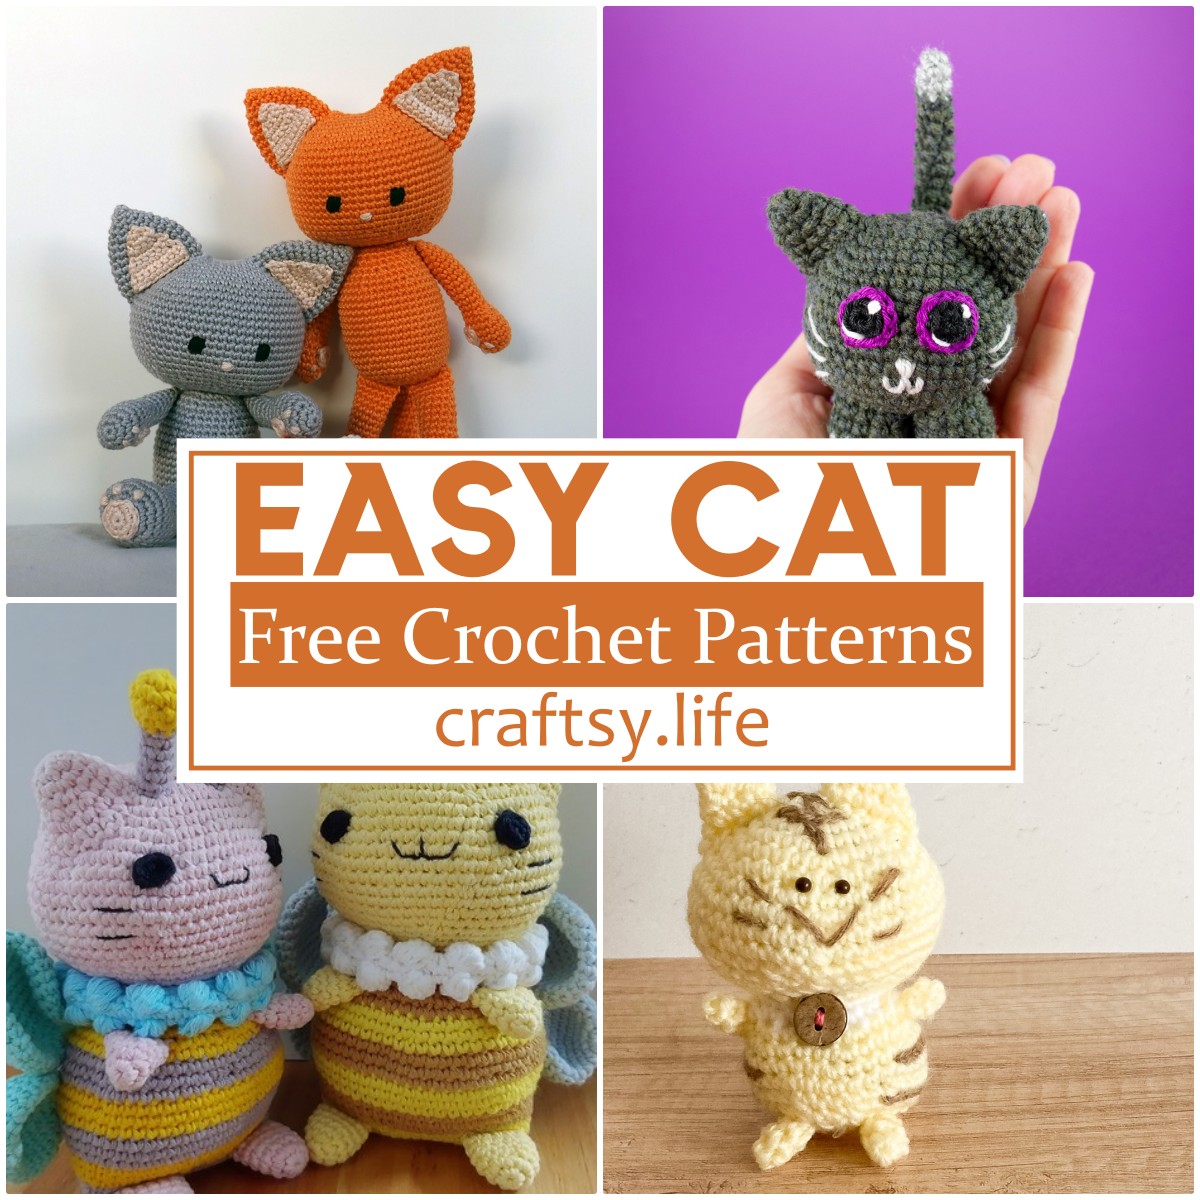 Free Crochet Cat Patterns